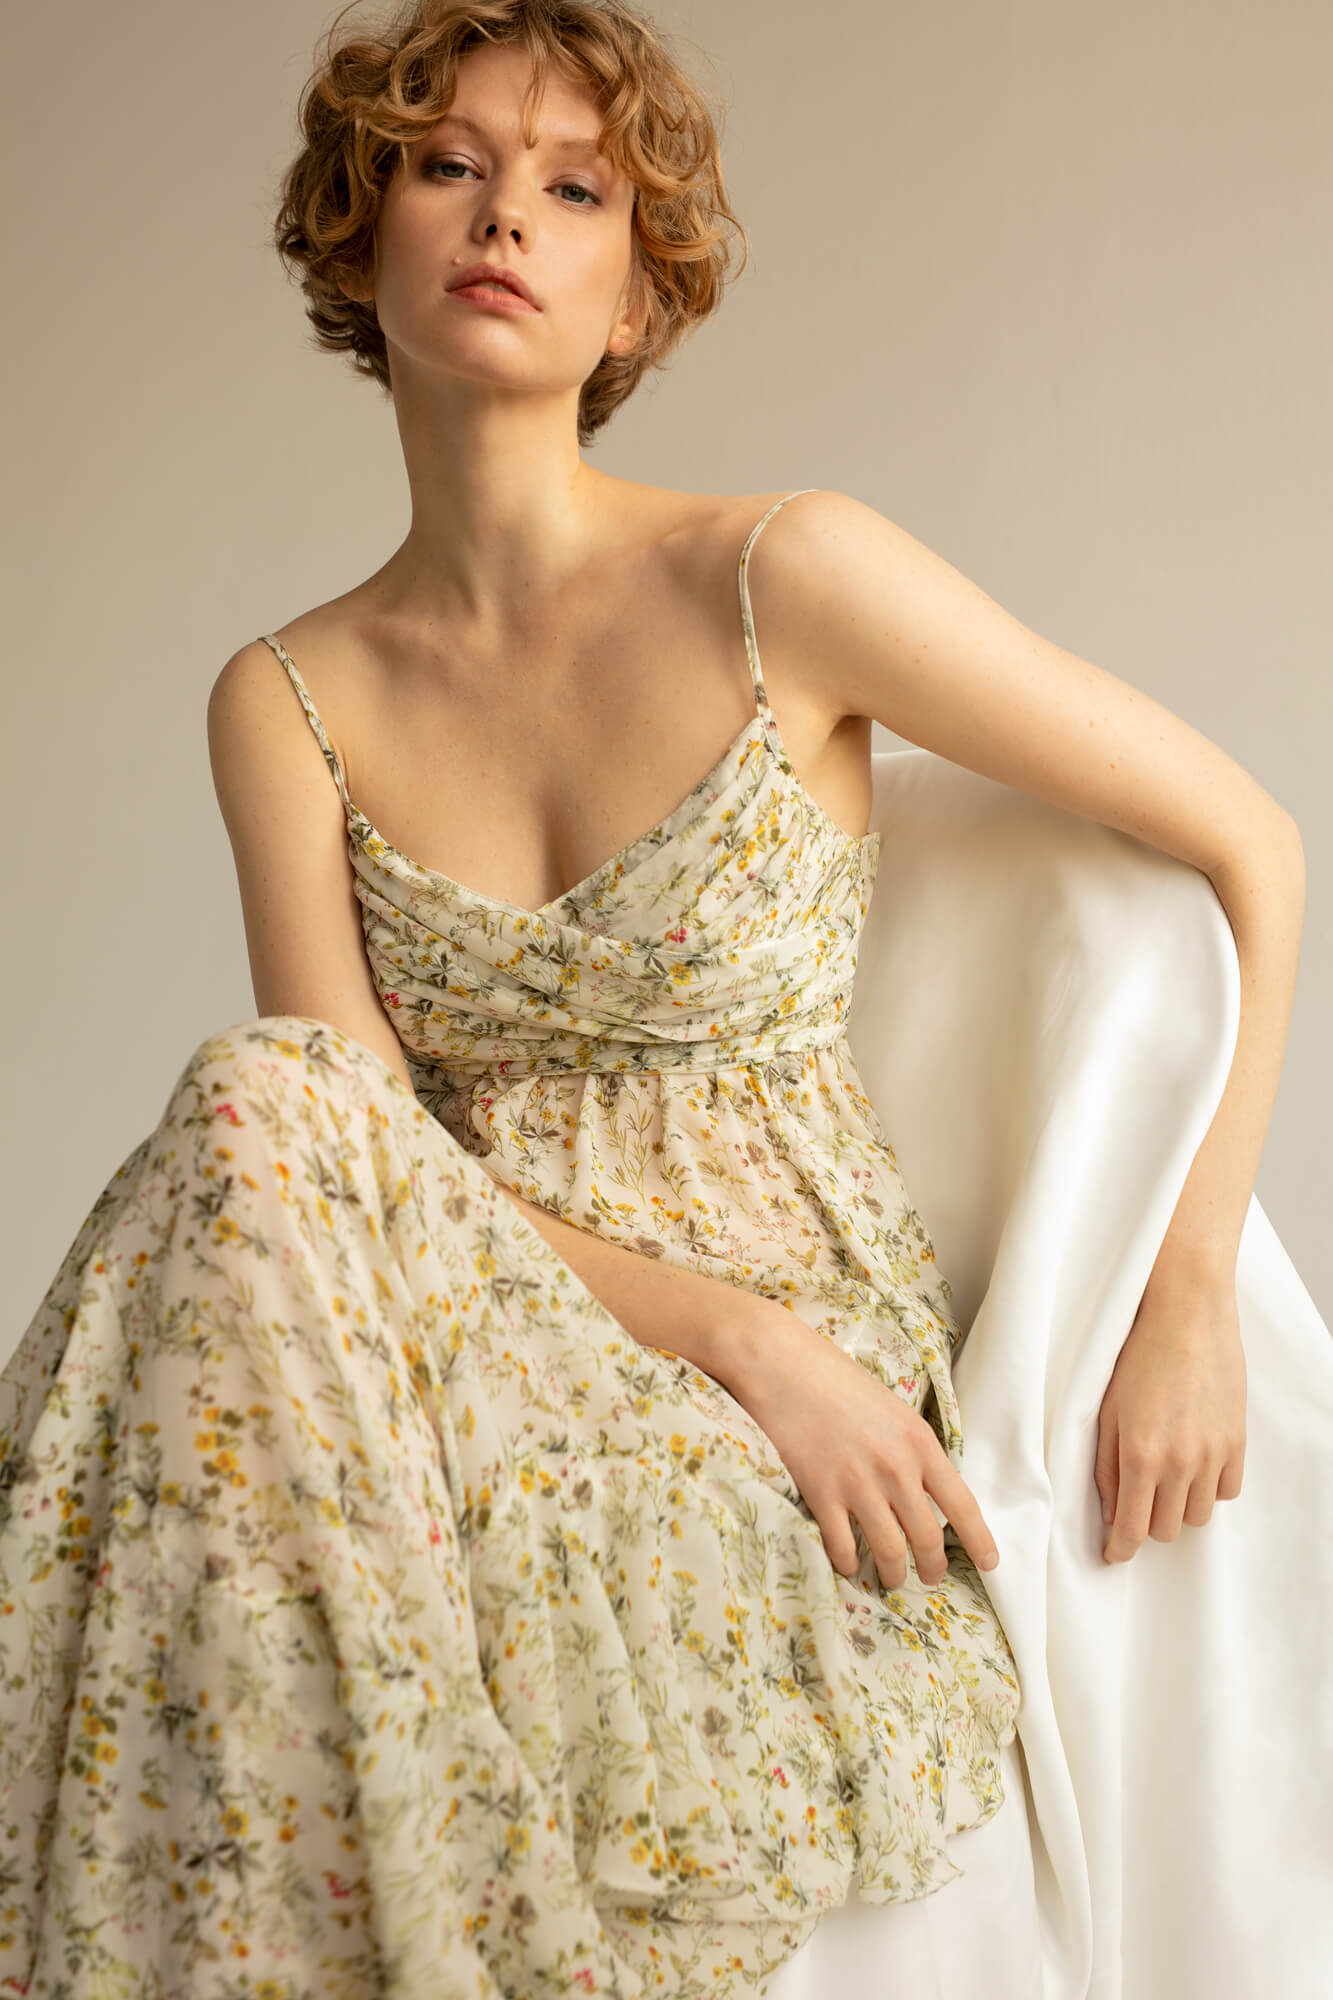 Venera Dress image featured